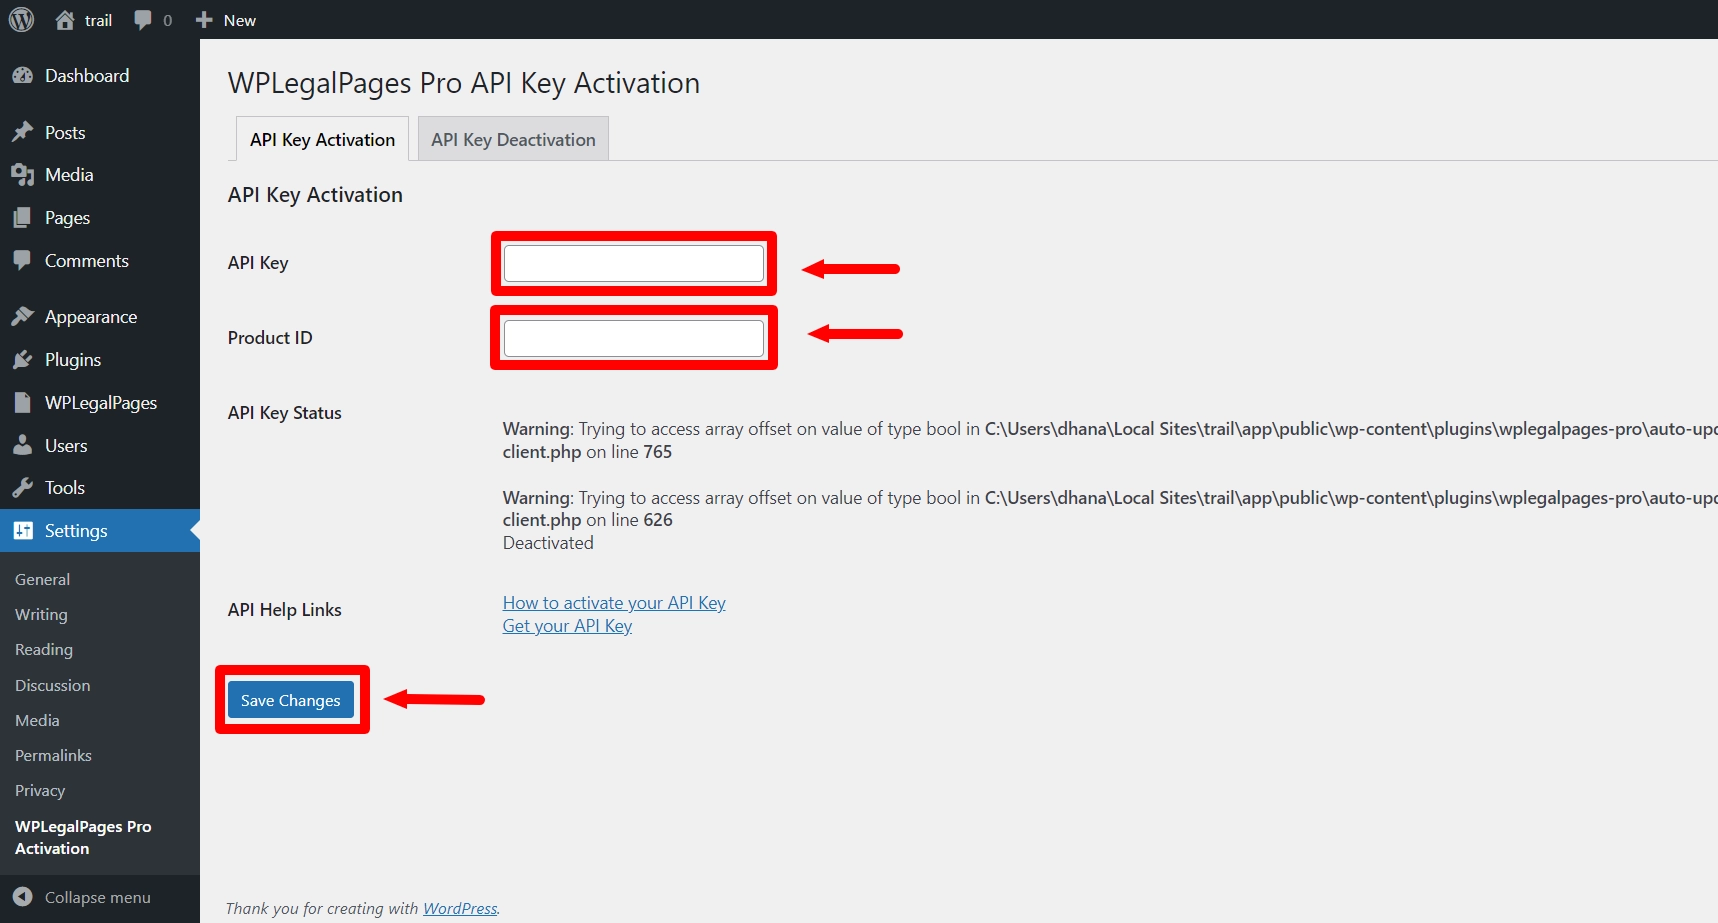 Entering API key activation details and saving changes